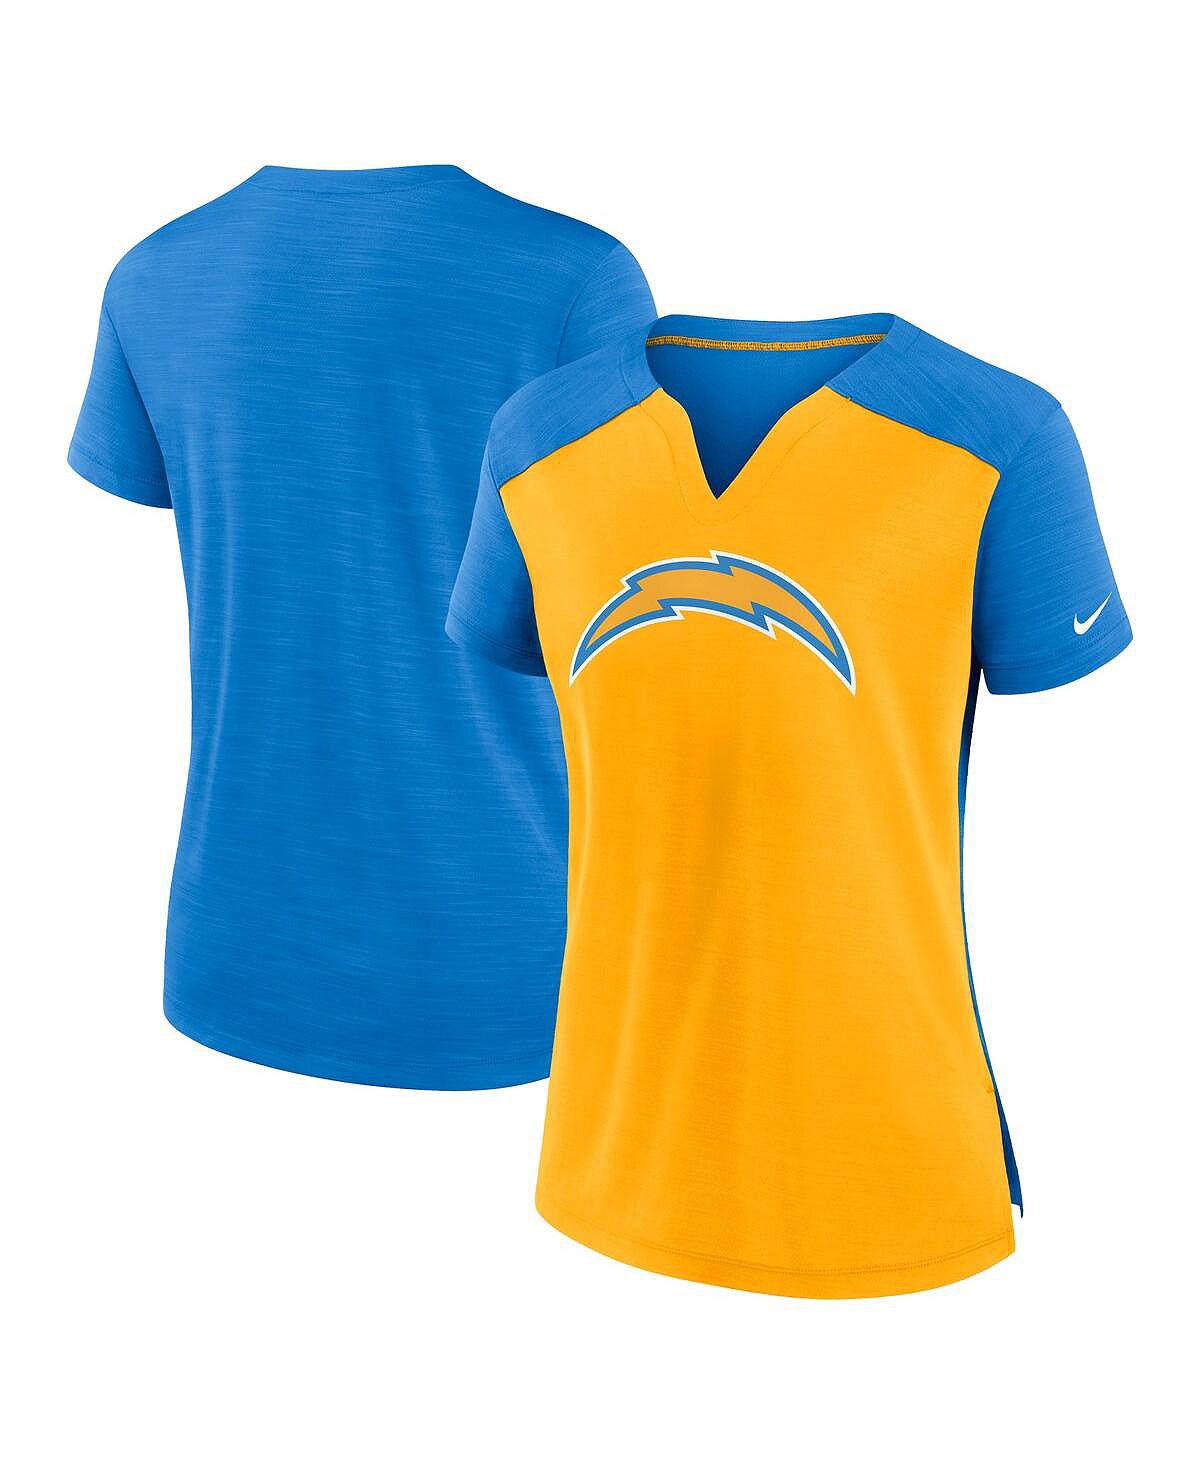 Женская золотисто-голубая футболка los angeles chargers impact exceed performance с вырезом под горло Nike, мульти